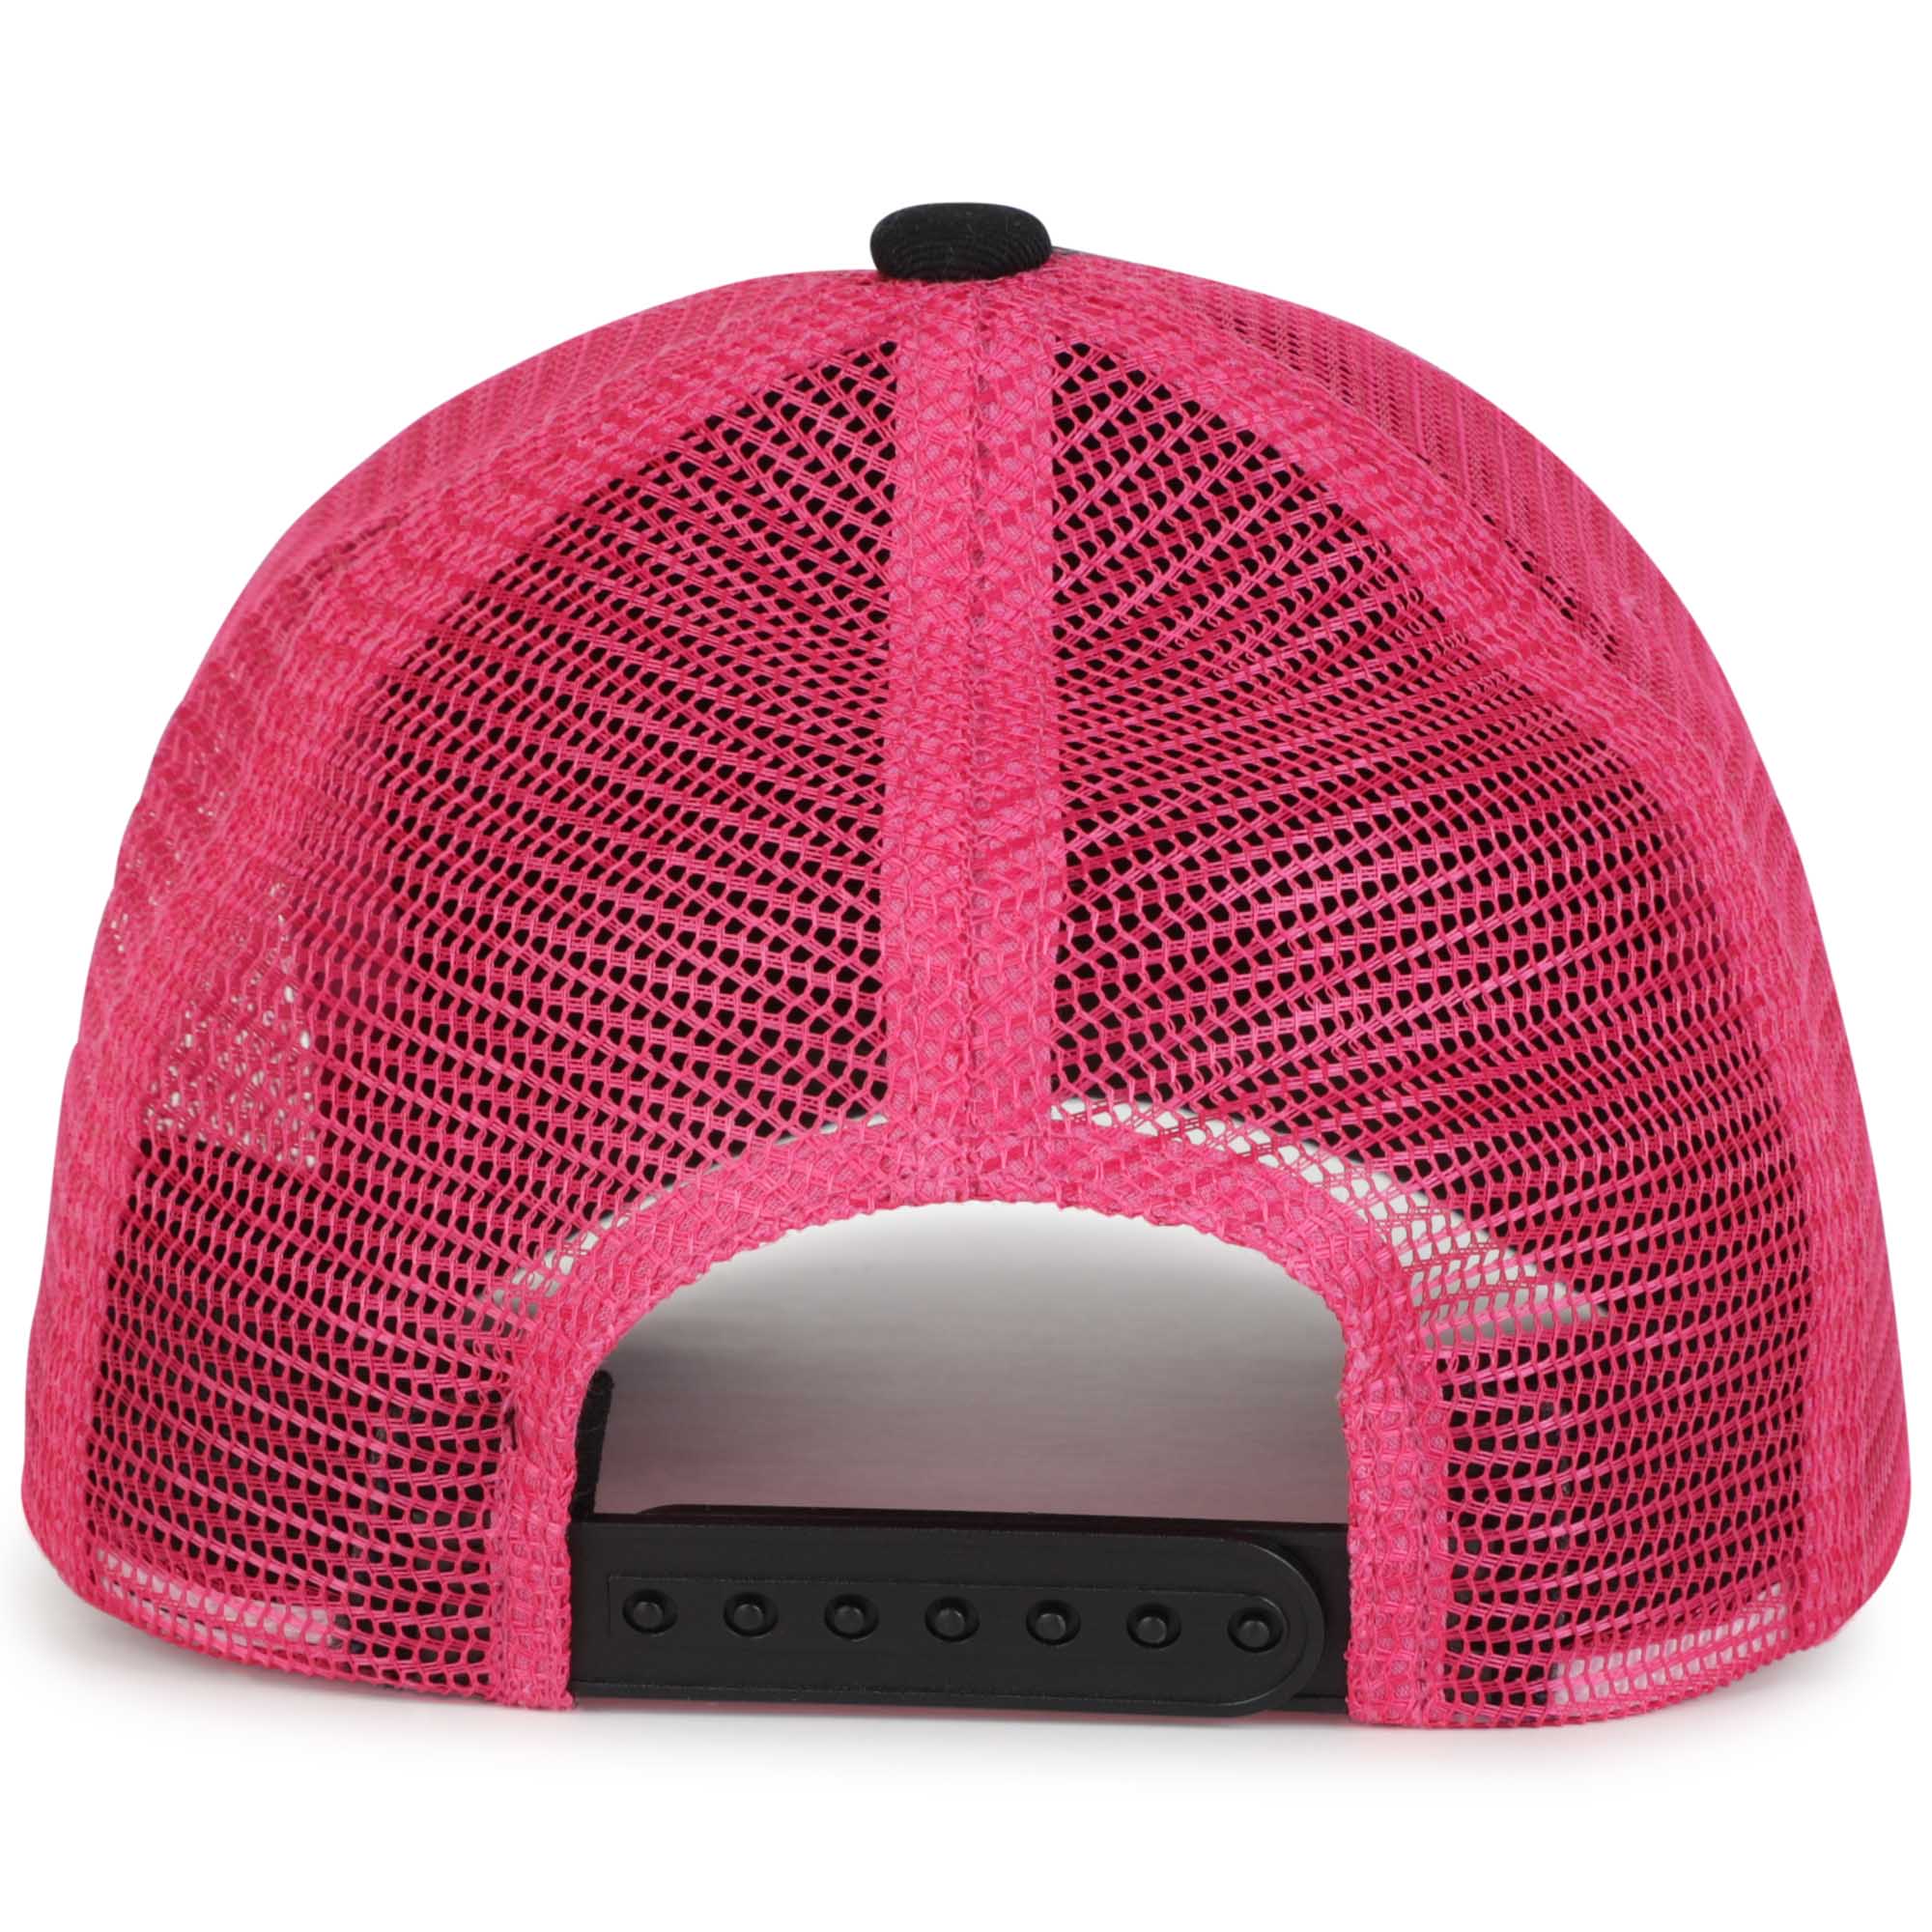 DKNY girls black and pink baseball cap back view